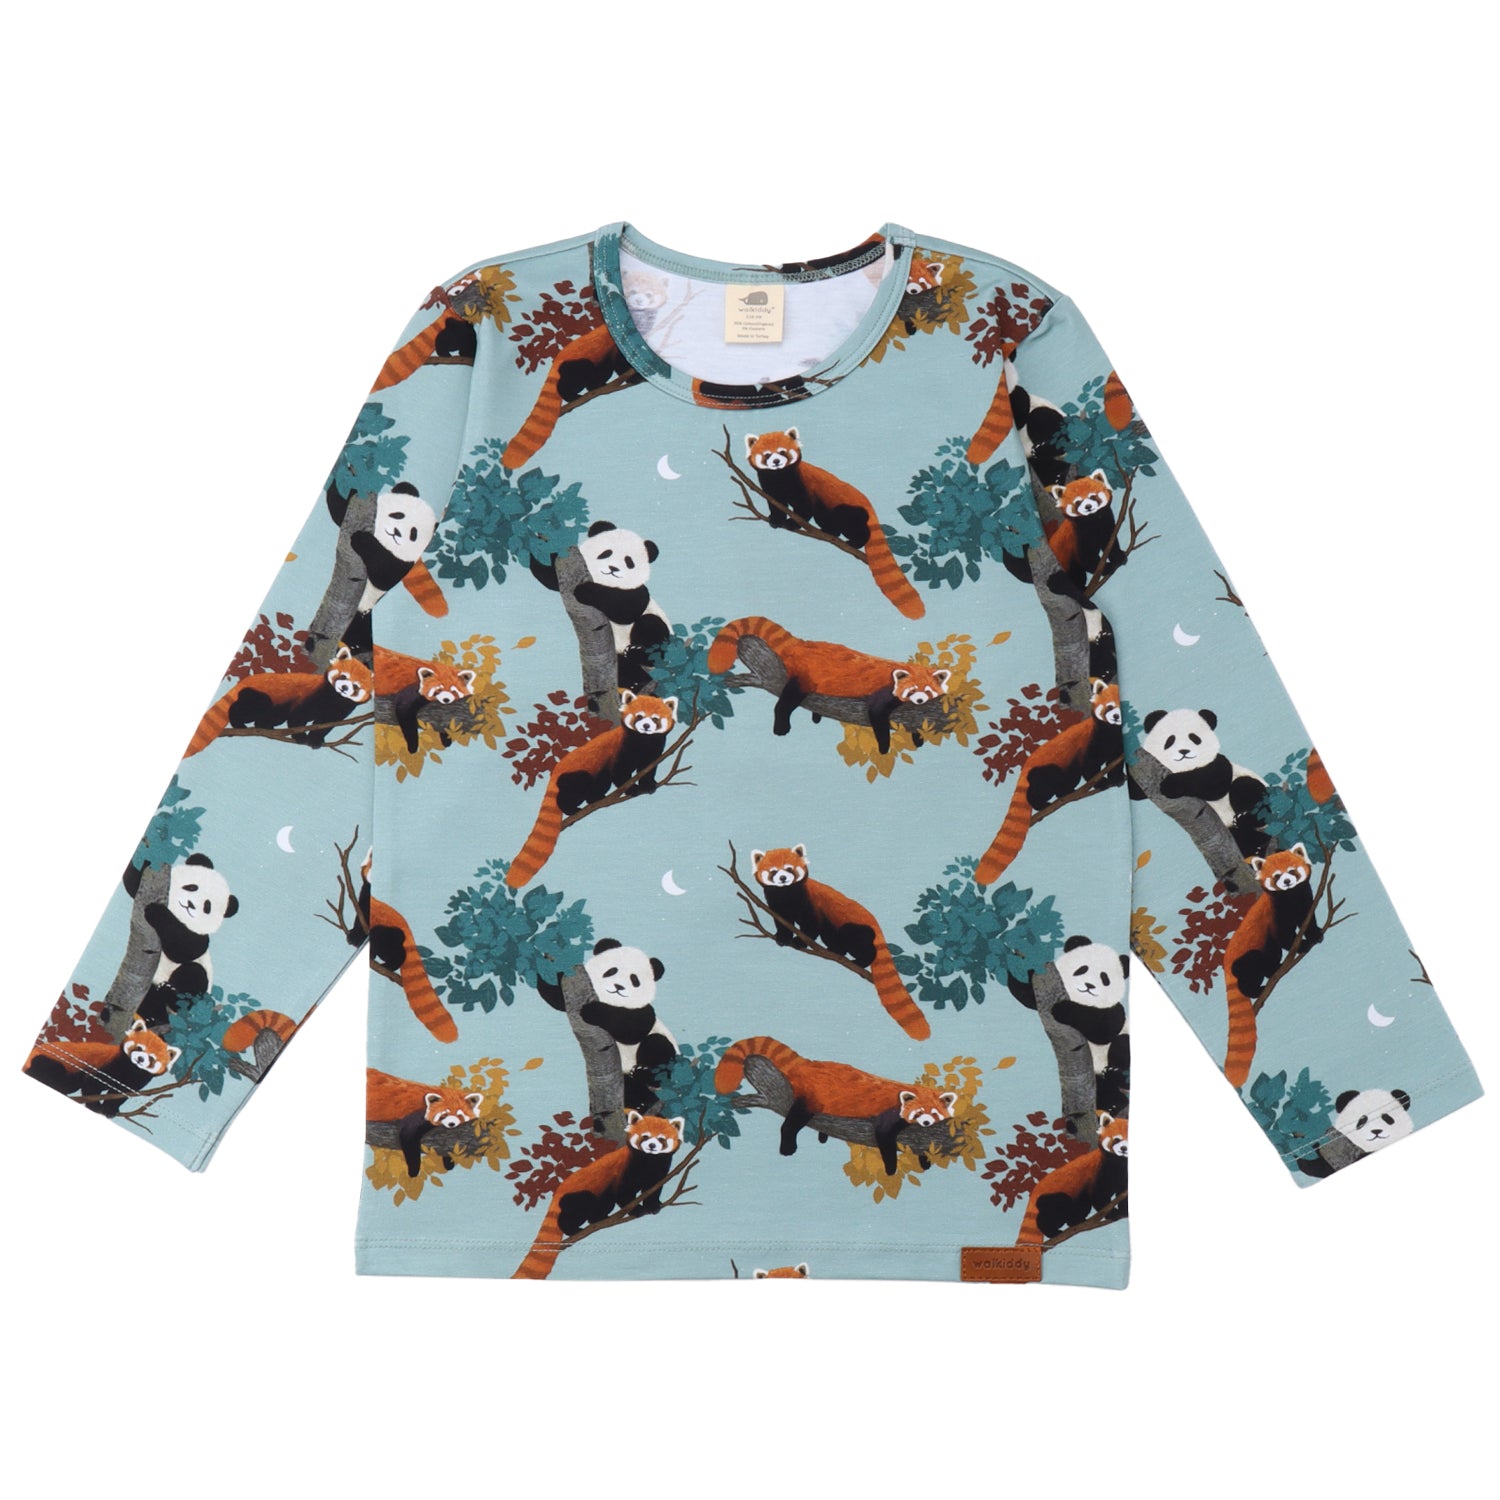 The – Panda Crib Friends Walkiddy Sleeve & Long Kid Shirt- Green Organic